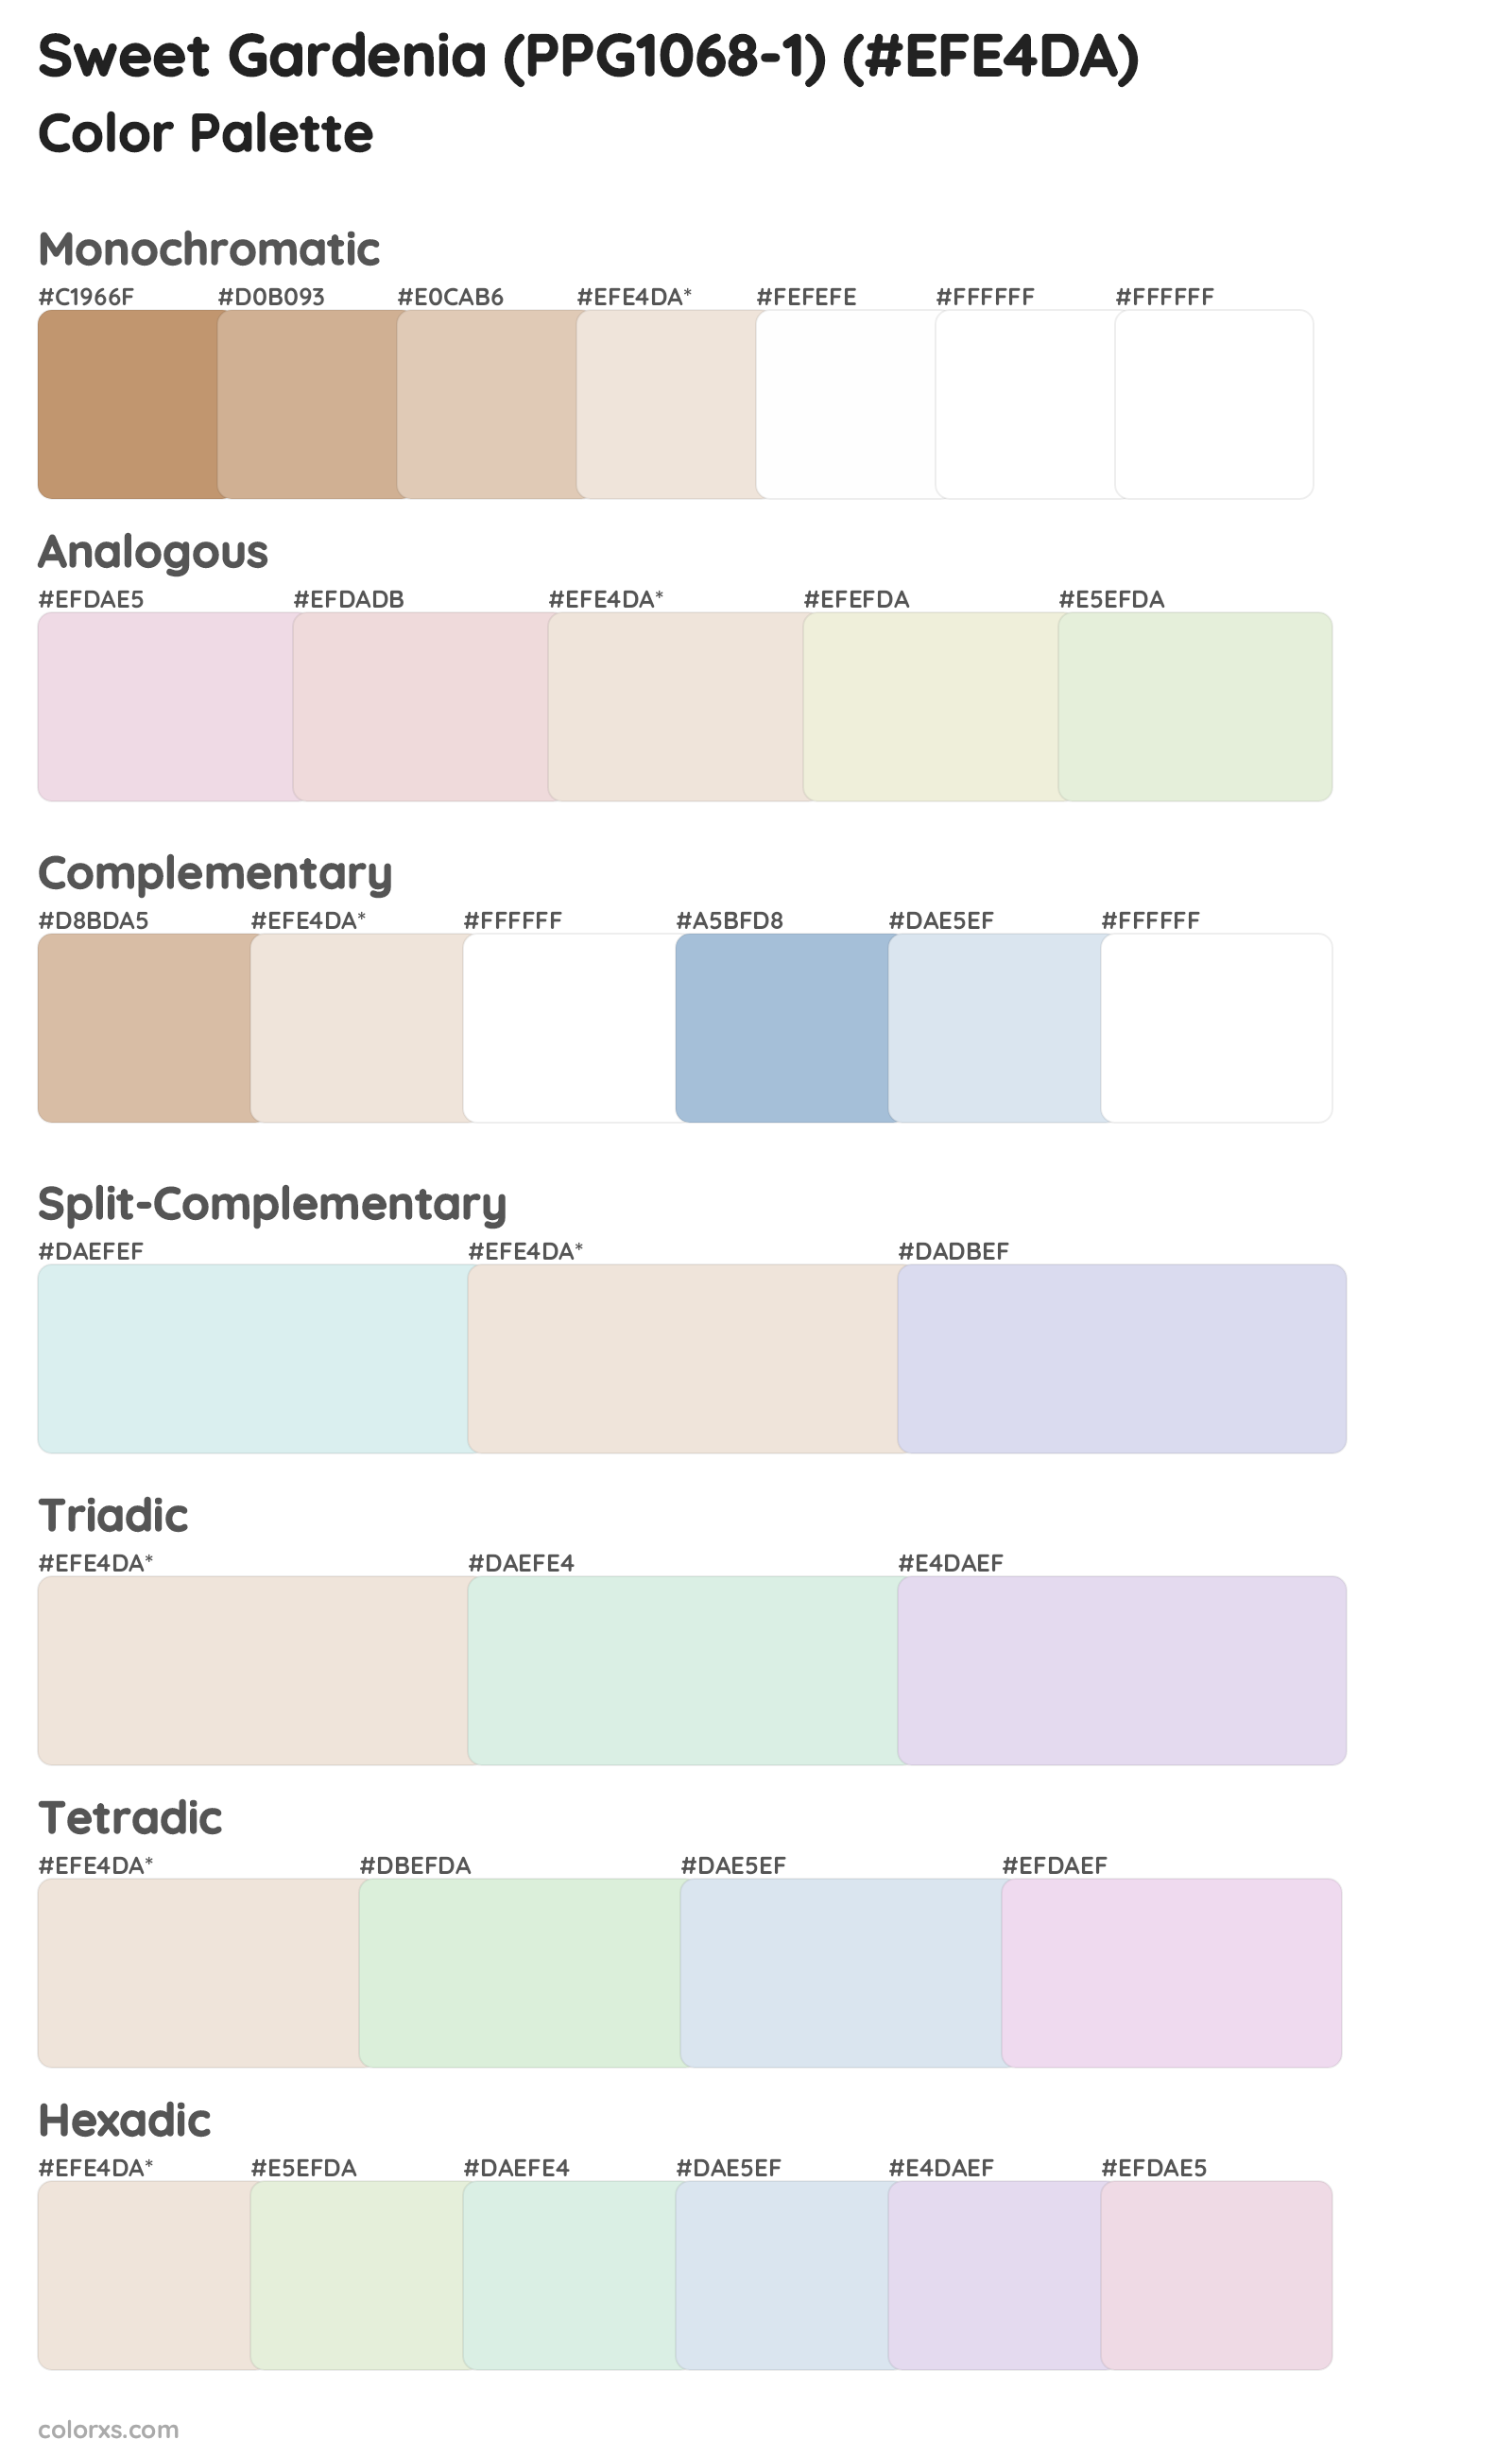 Sweet Gardenia (PPG1068-1) Color Scheme Palettes